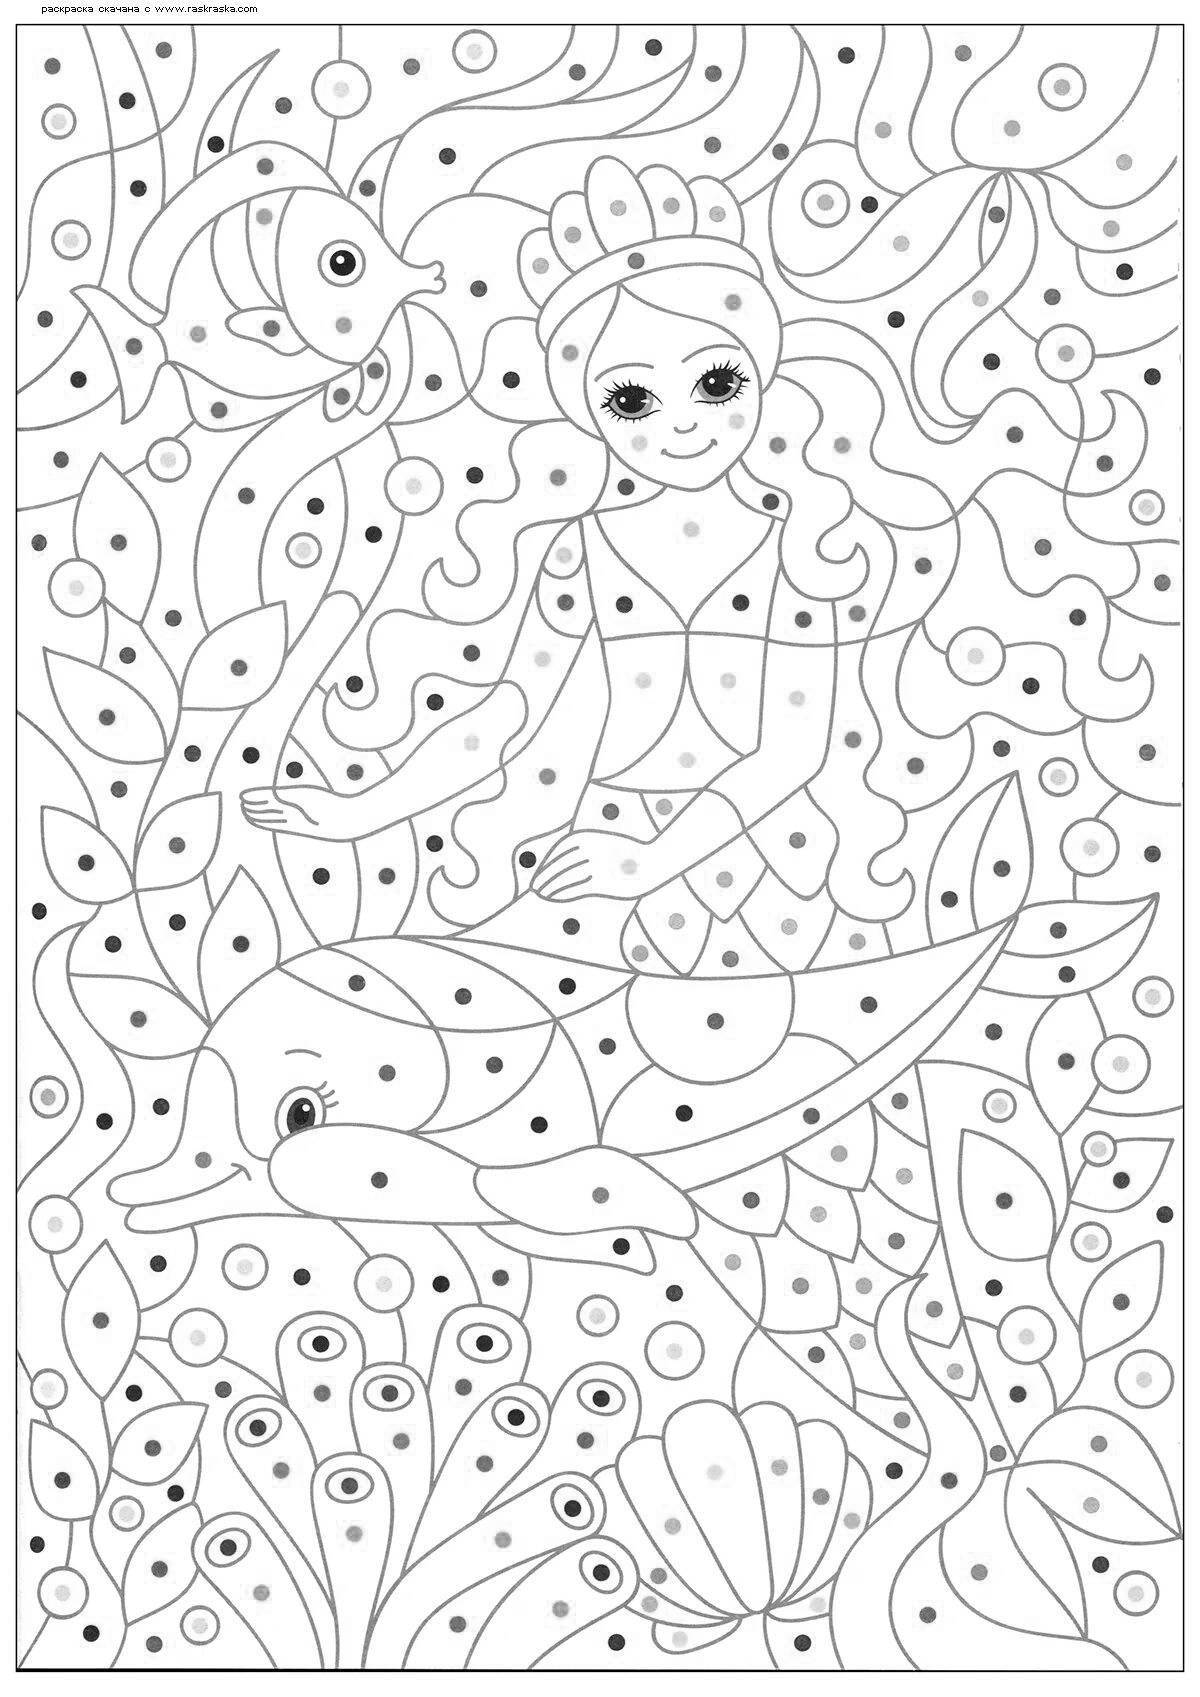 Magic mermaid coloring by numbers